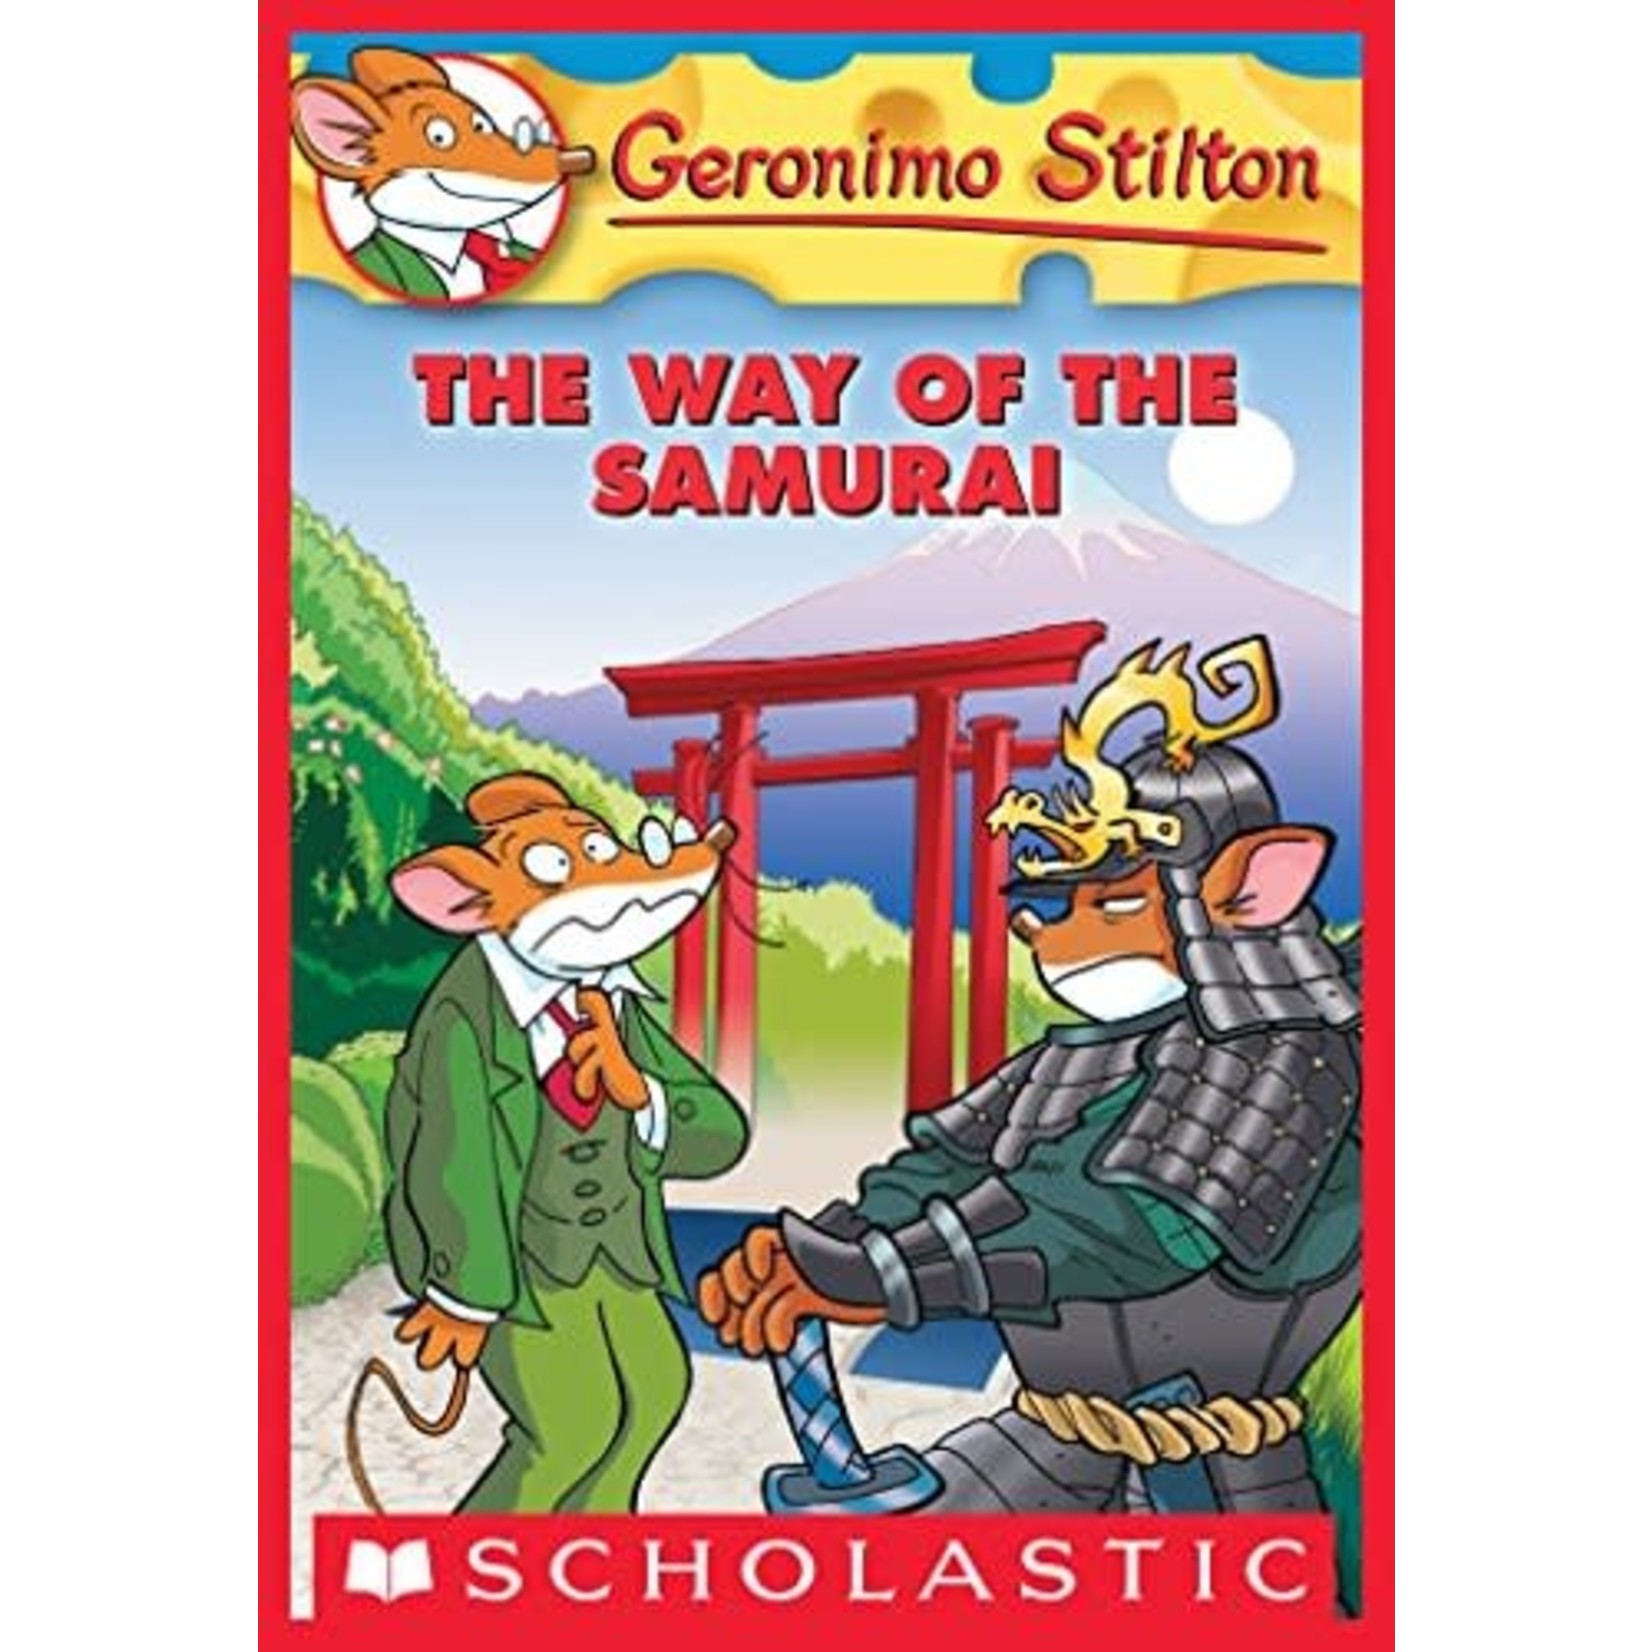 Geronimo Stilton #49 The Way of the Samurai